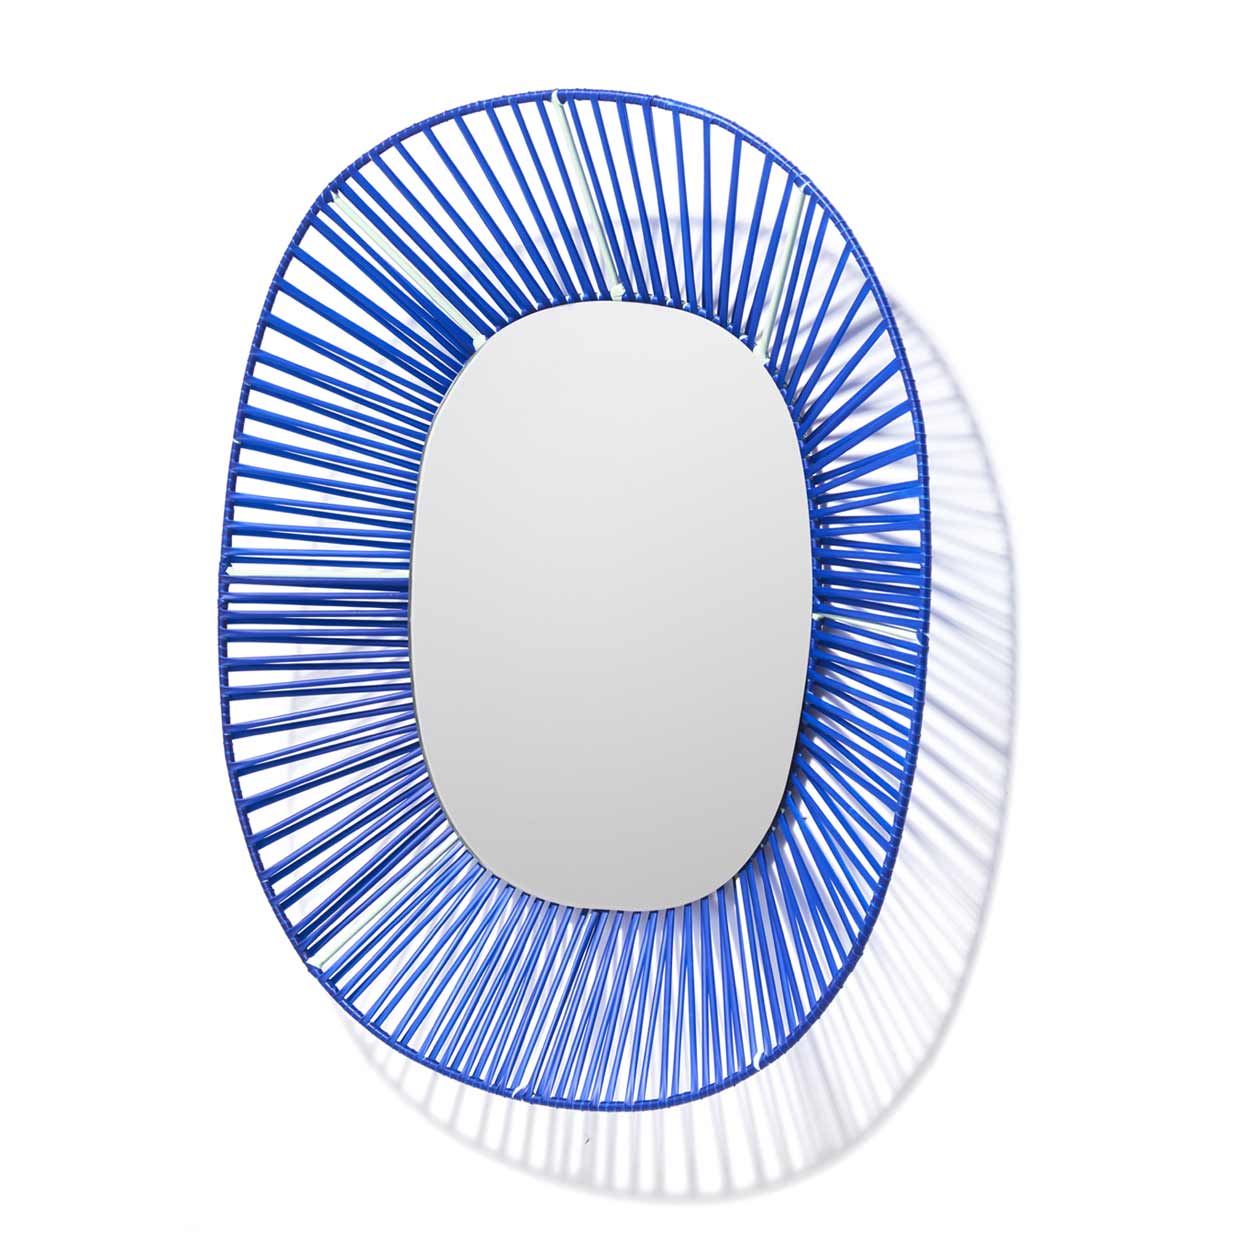 Cesta - Wall Mirror Oval